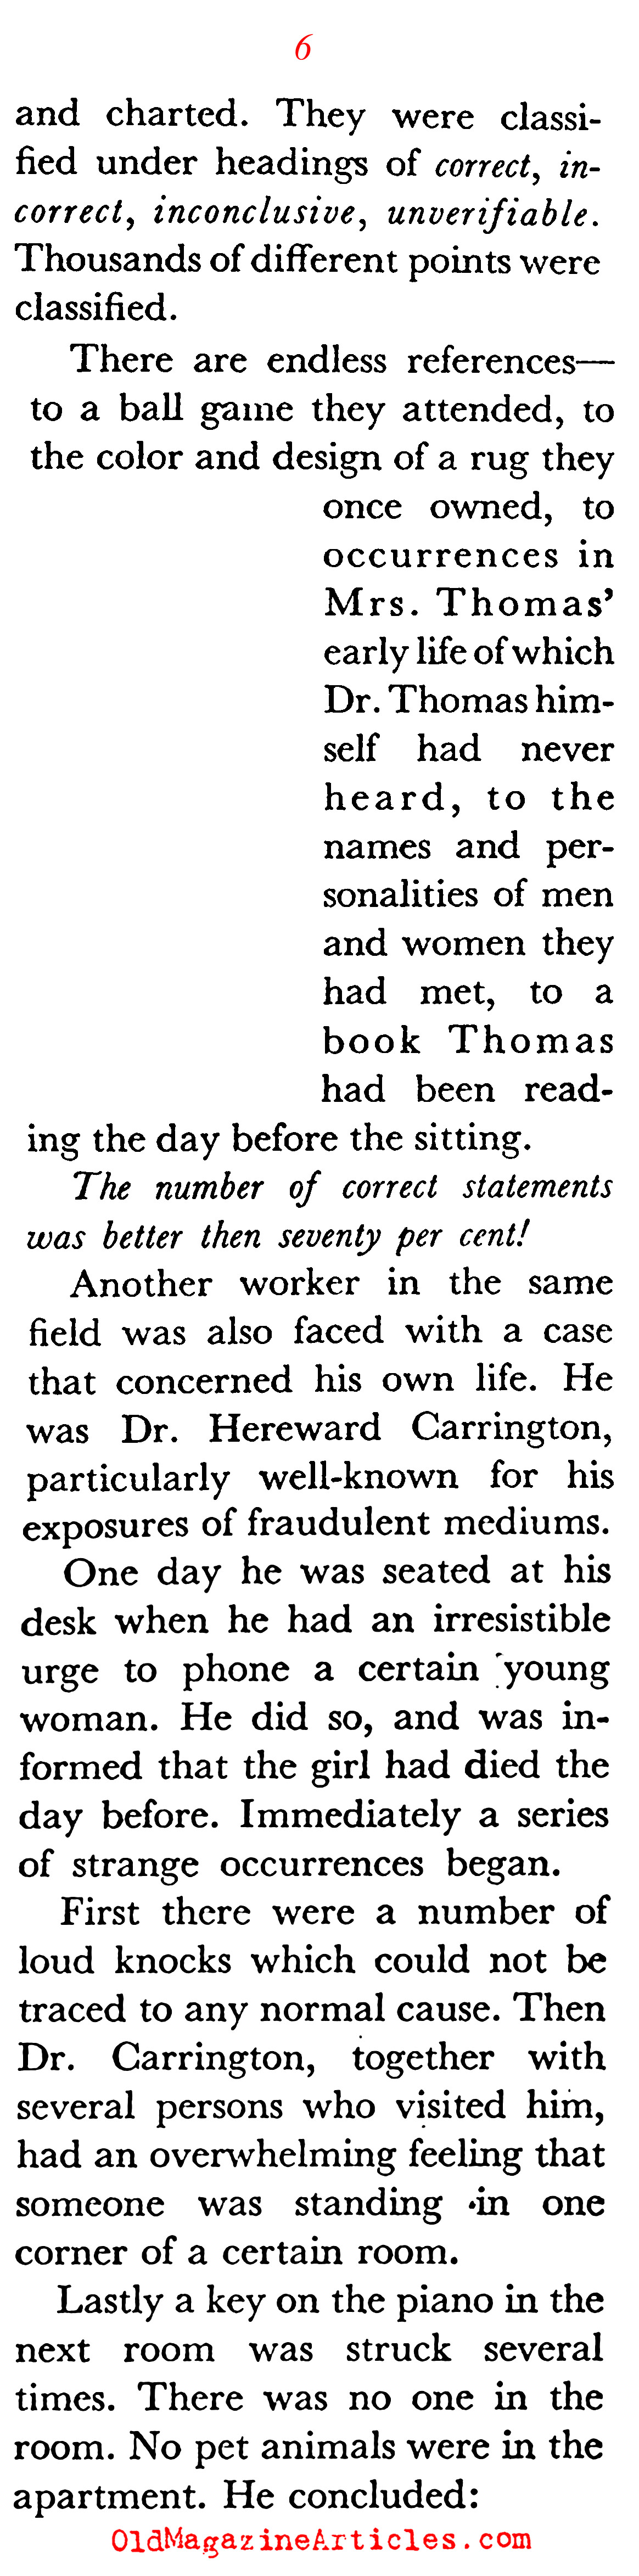 Comprehending the Afterlife (Coronet Magazine, 1941)